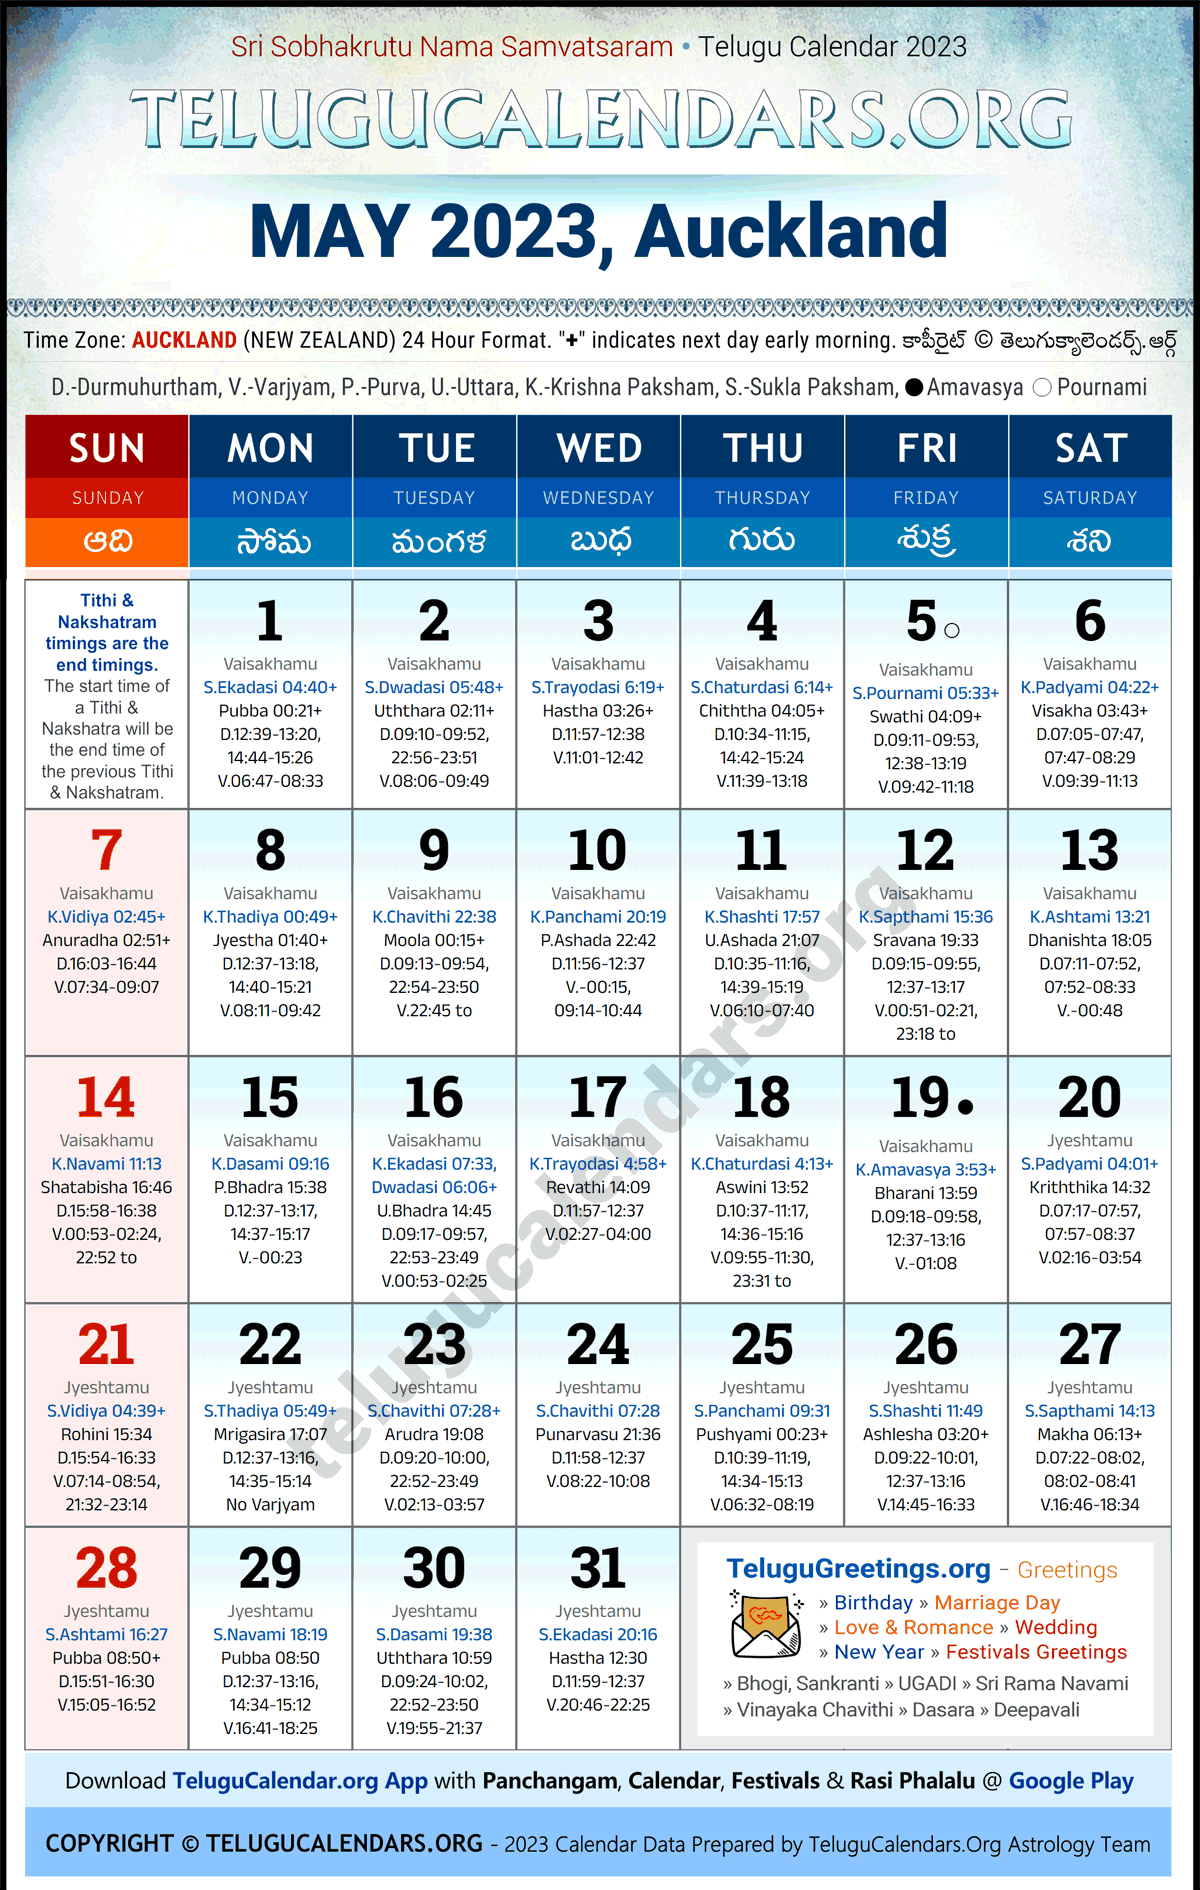 Telugu Calendar 2023 May Festivals for Auckland